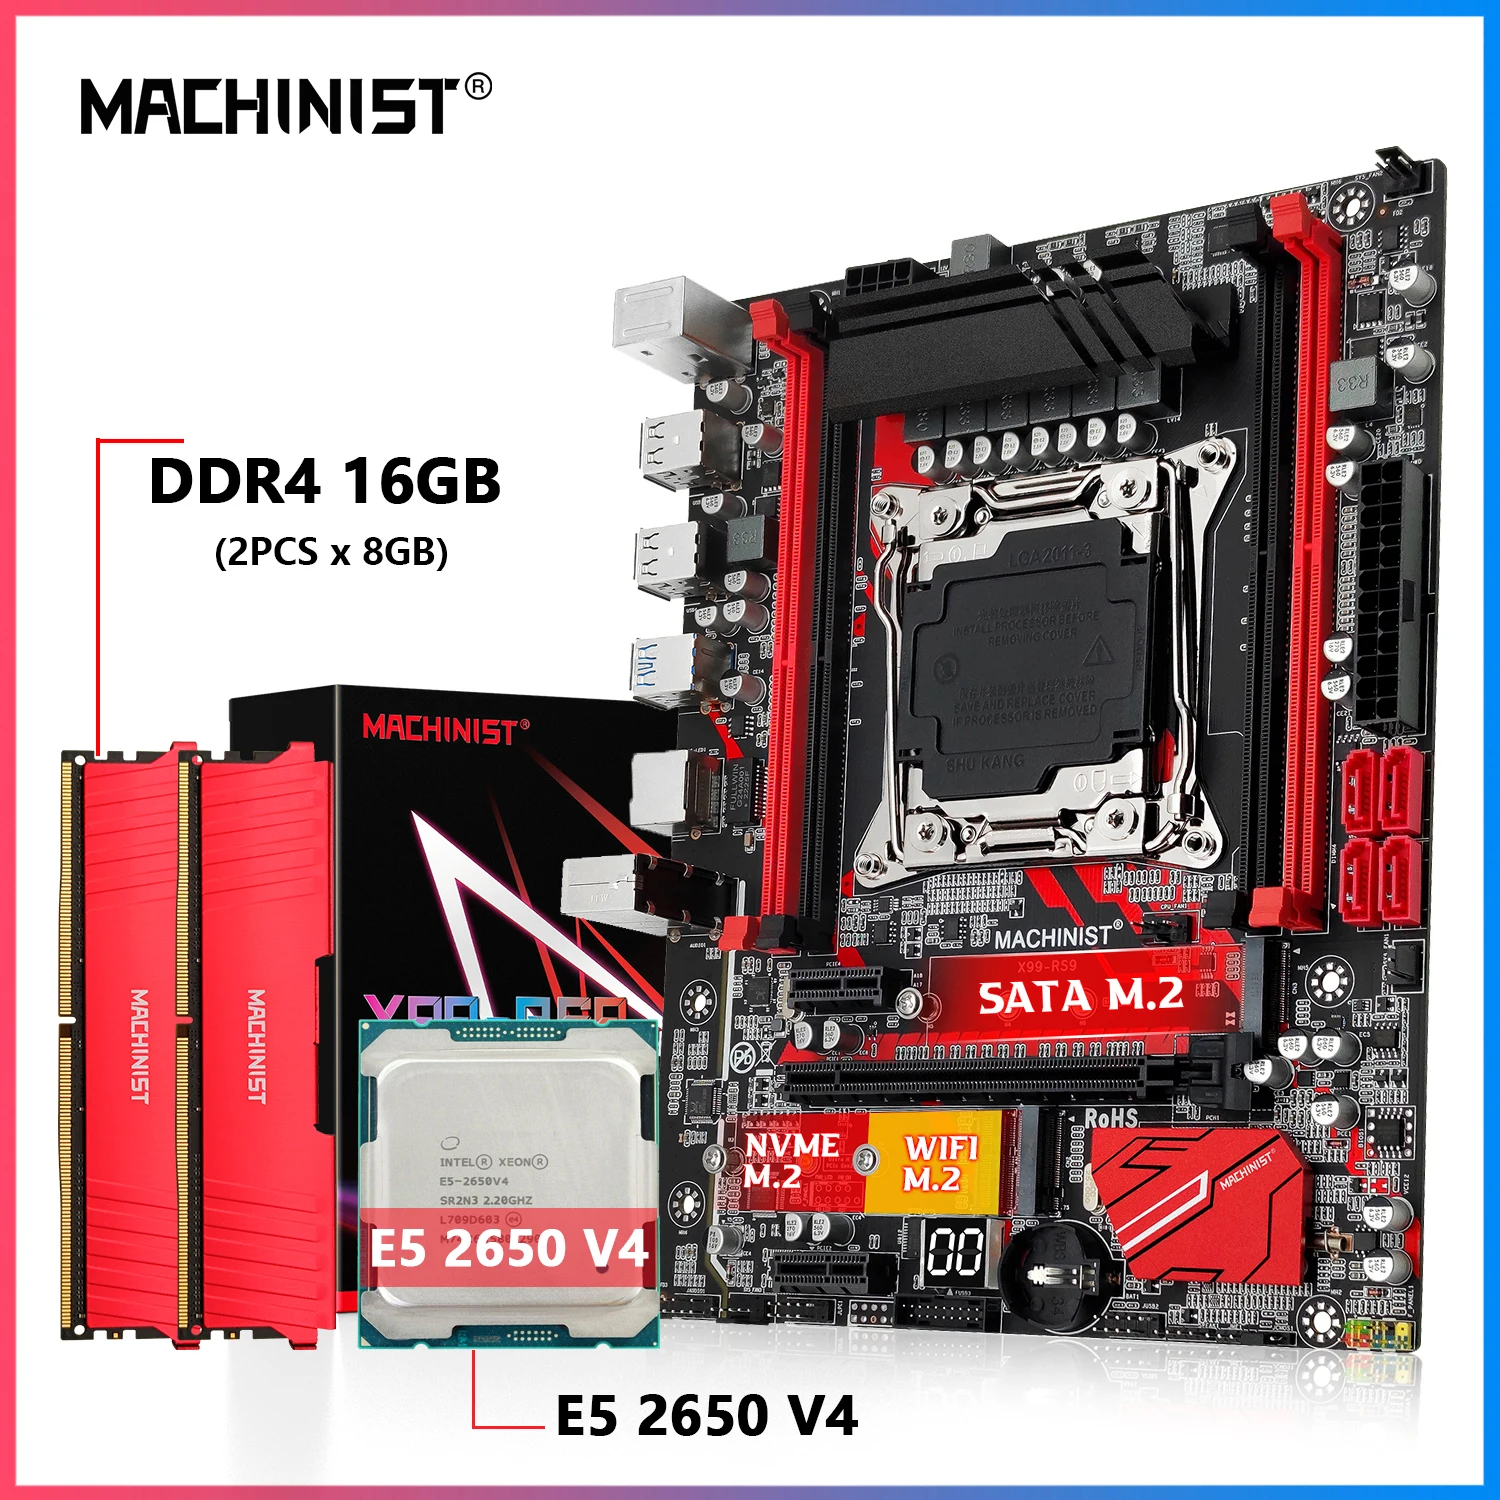 

Комплект материнской платы MACHINIST RS9 LGA 2011-3, процессор Intel Xeon E5 2650 V4 + DDR4, 2 шт. * 8 Гб памяти combo NVME/WIFI M.2